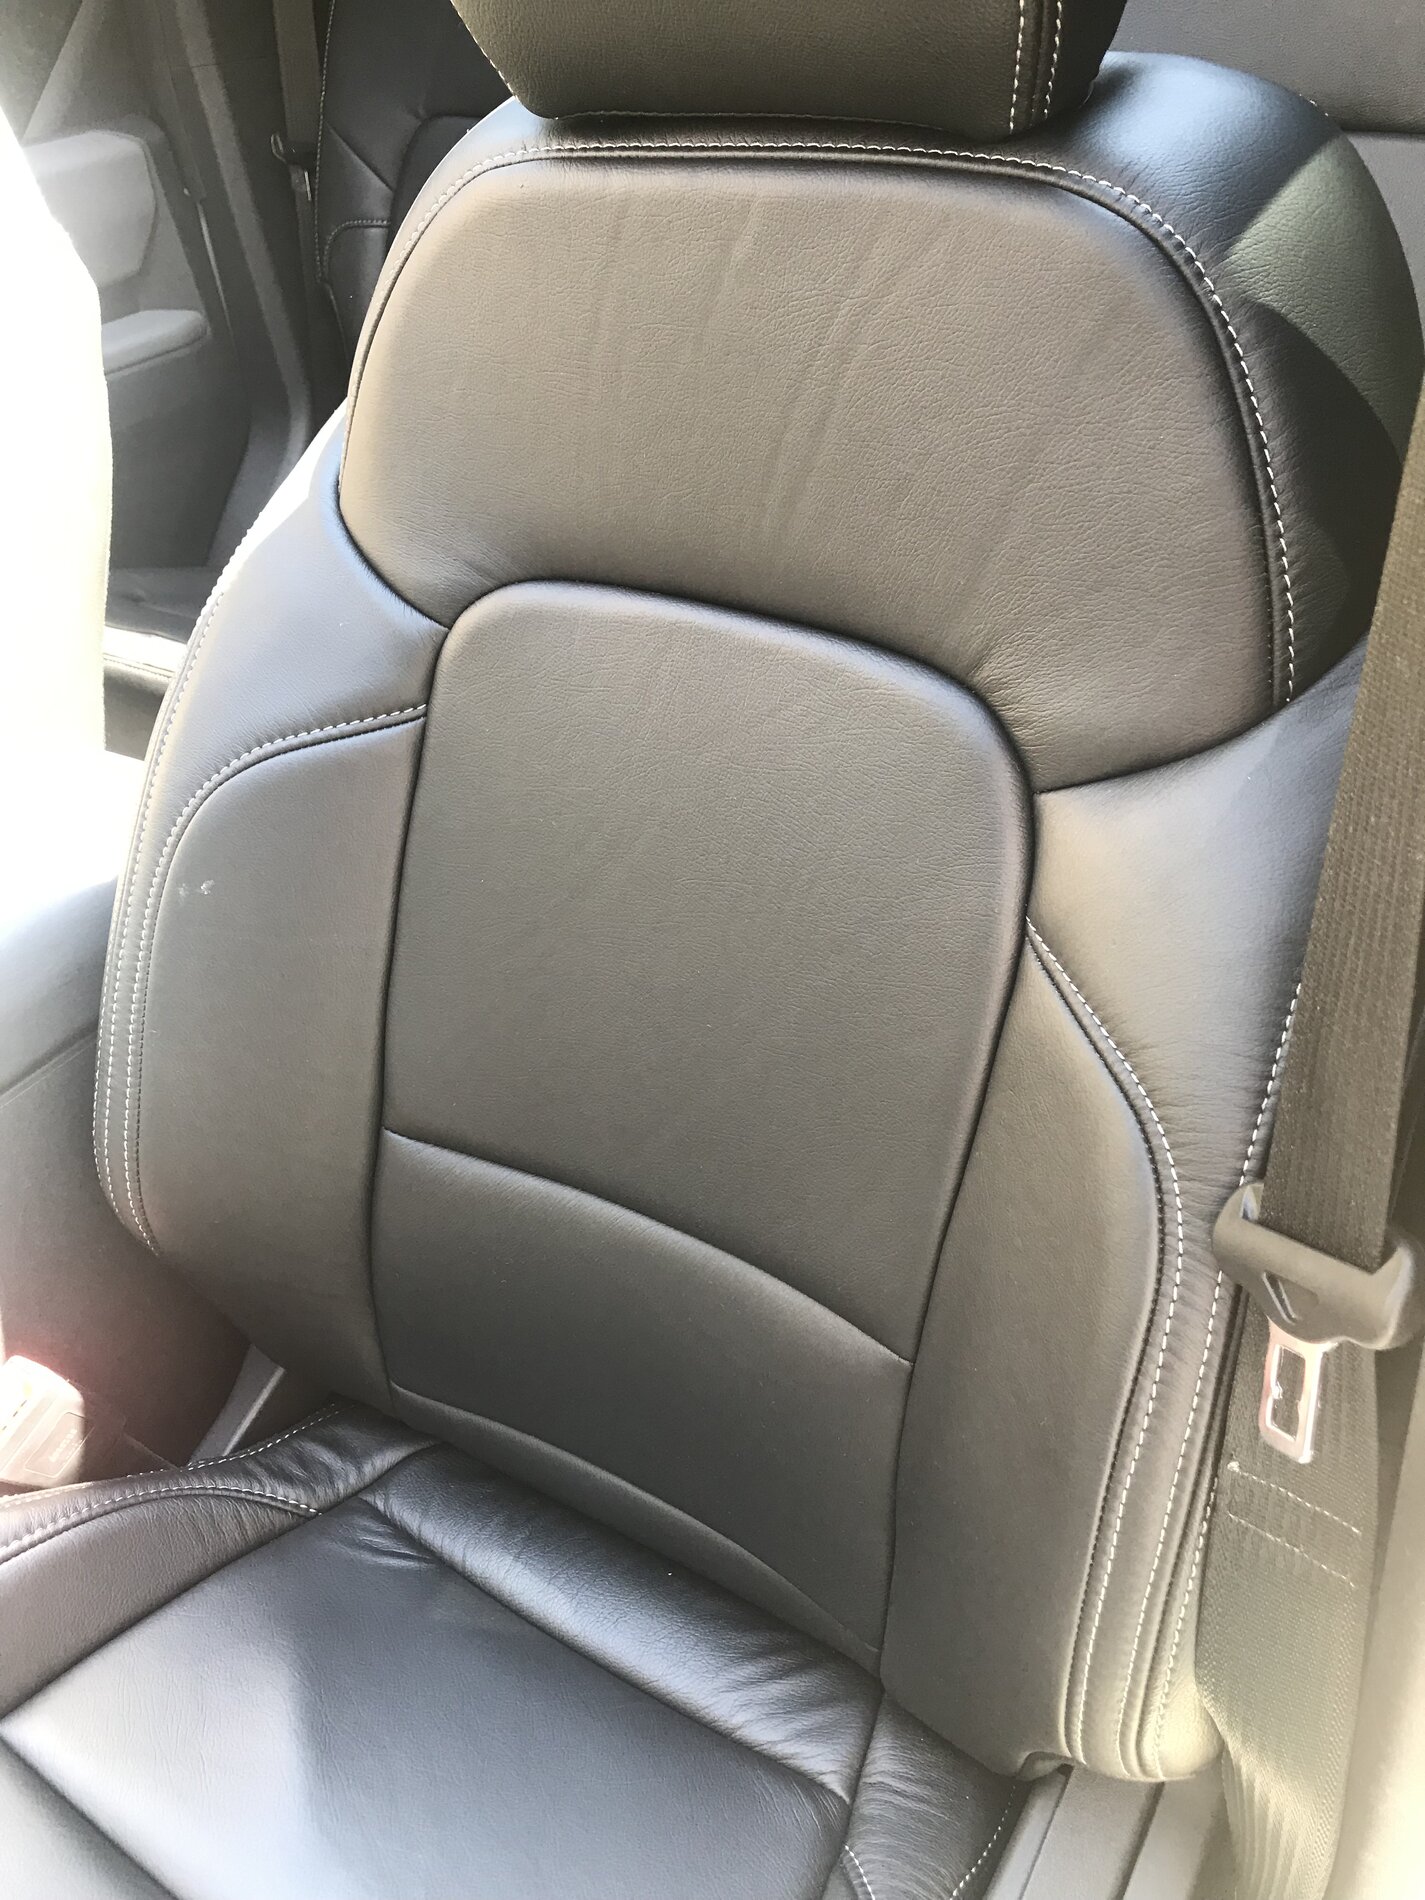 Ford Bronco Installed Katzkin custom leather seat covers in Big Bend interior AC858304-7971-4114-B380-7D92C4220BA3